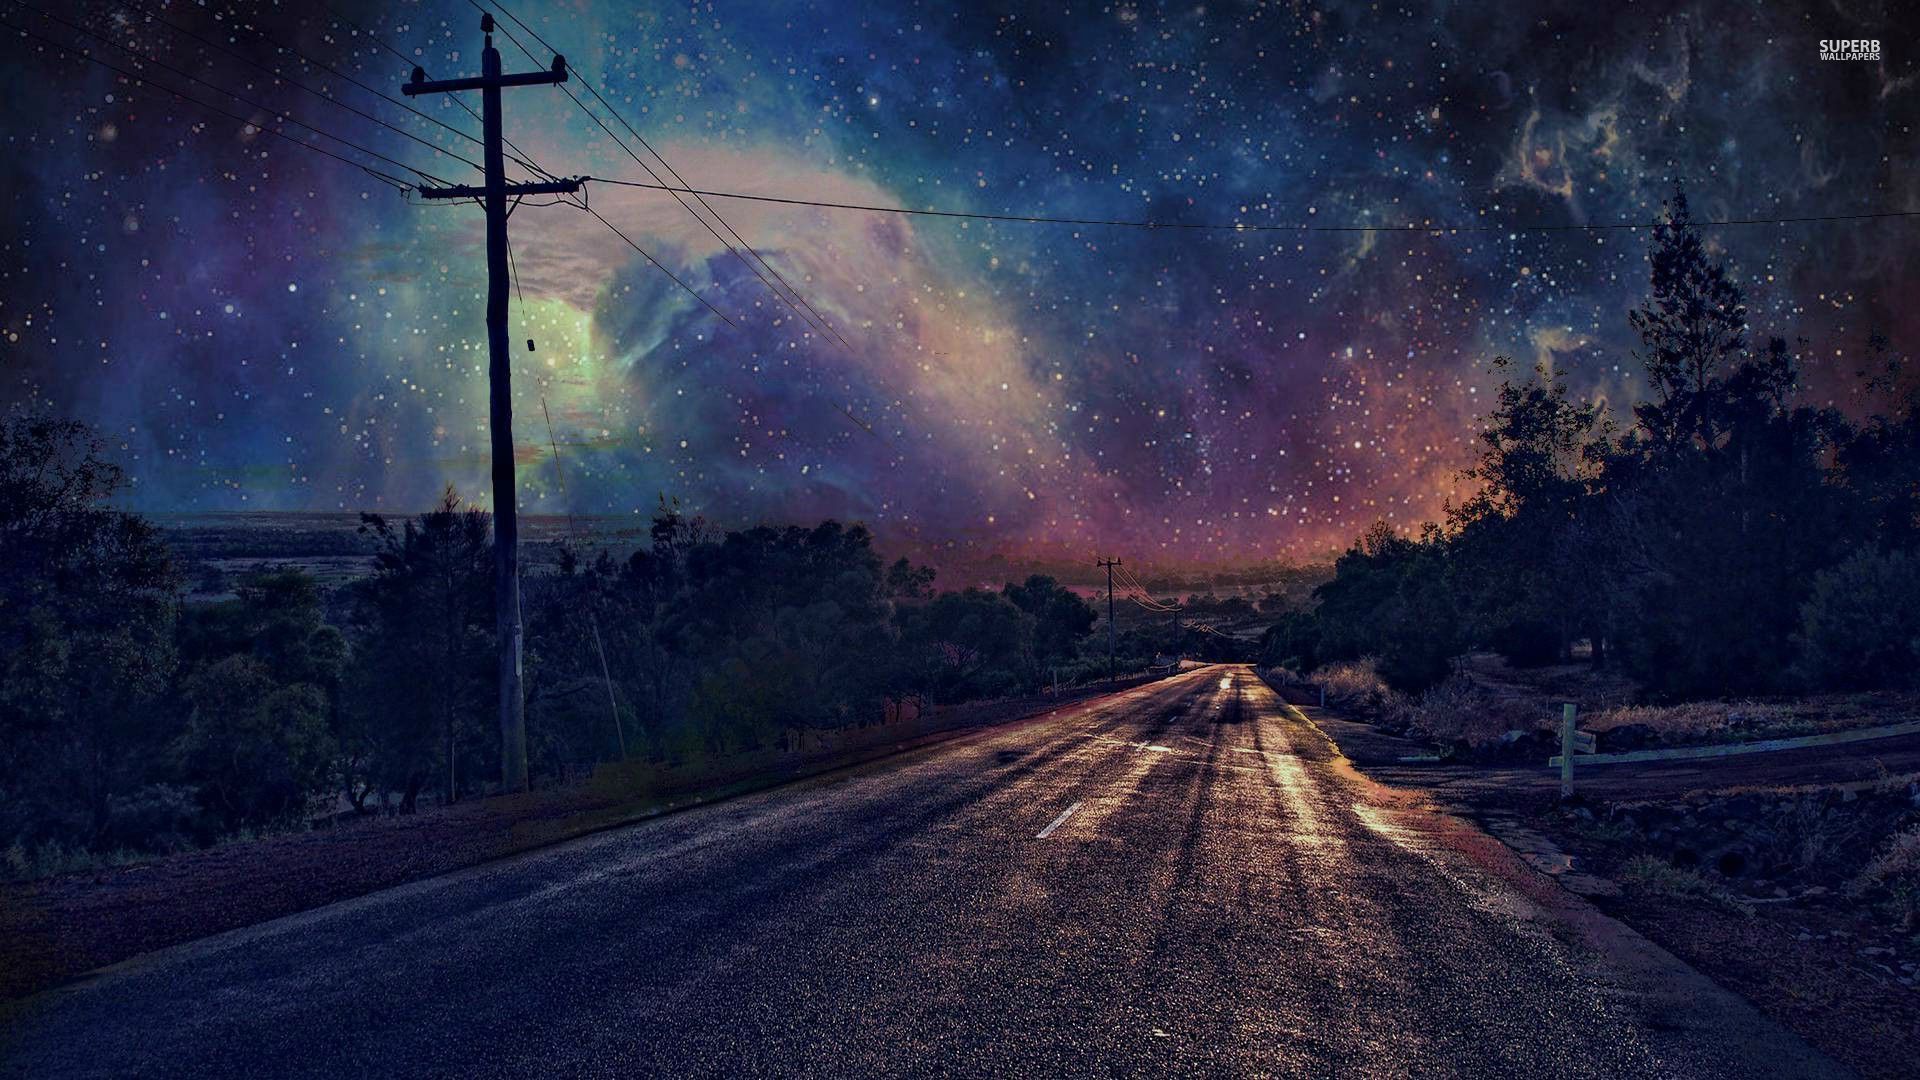 Nebula covered night sky wallpaper - Digital Art wallpapers -